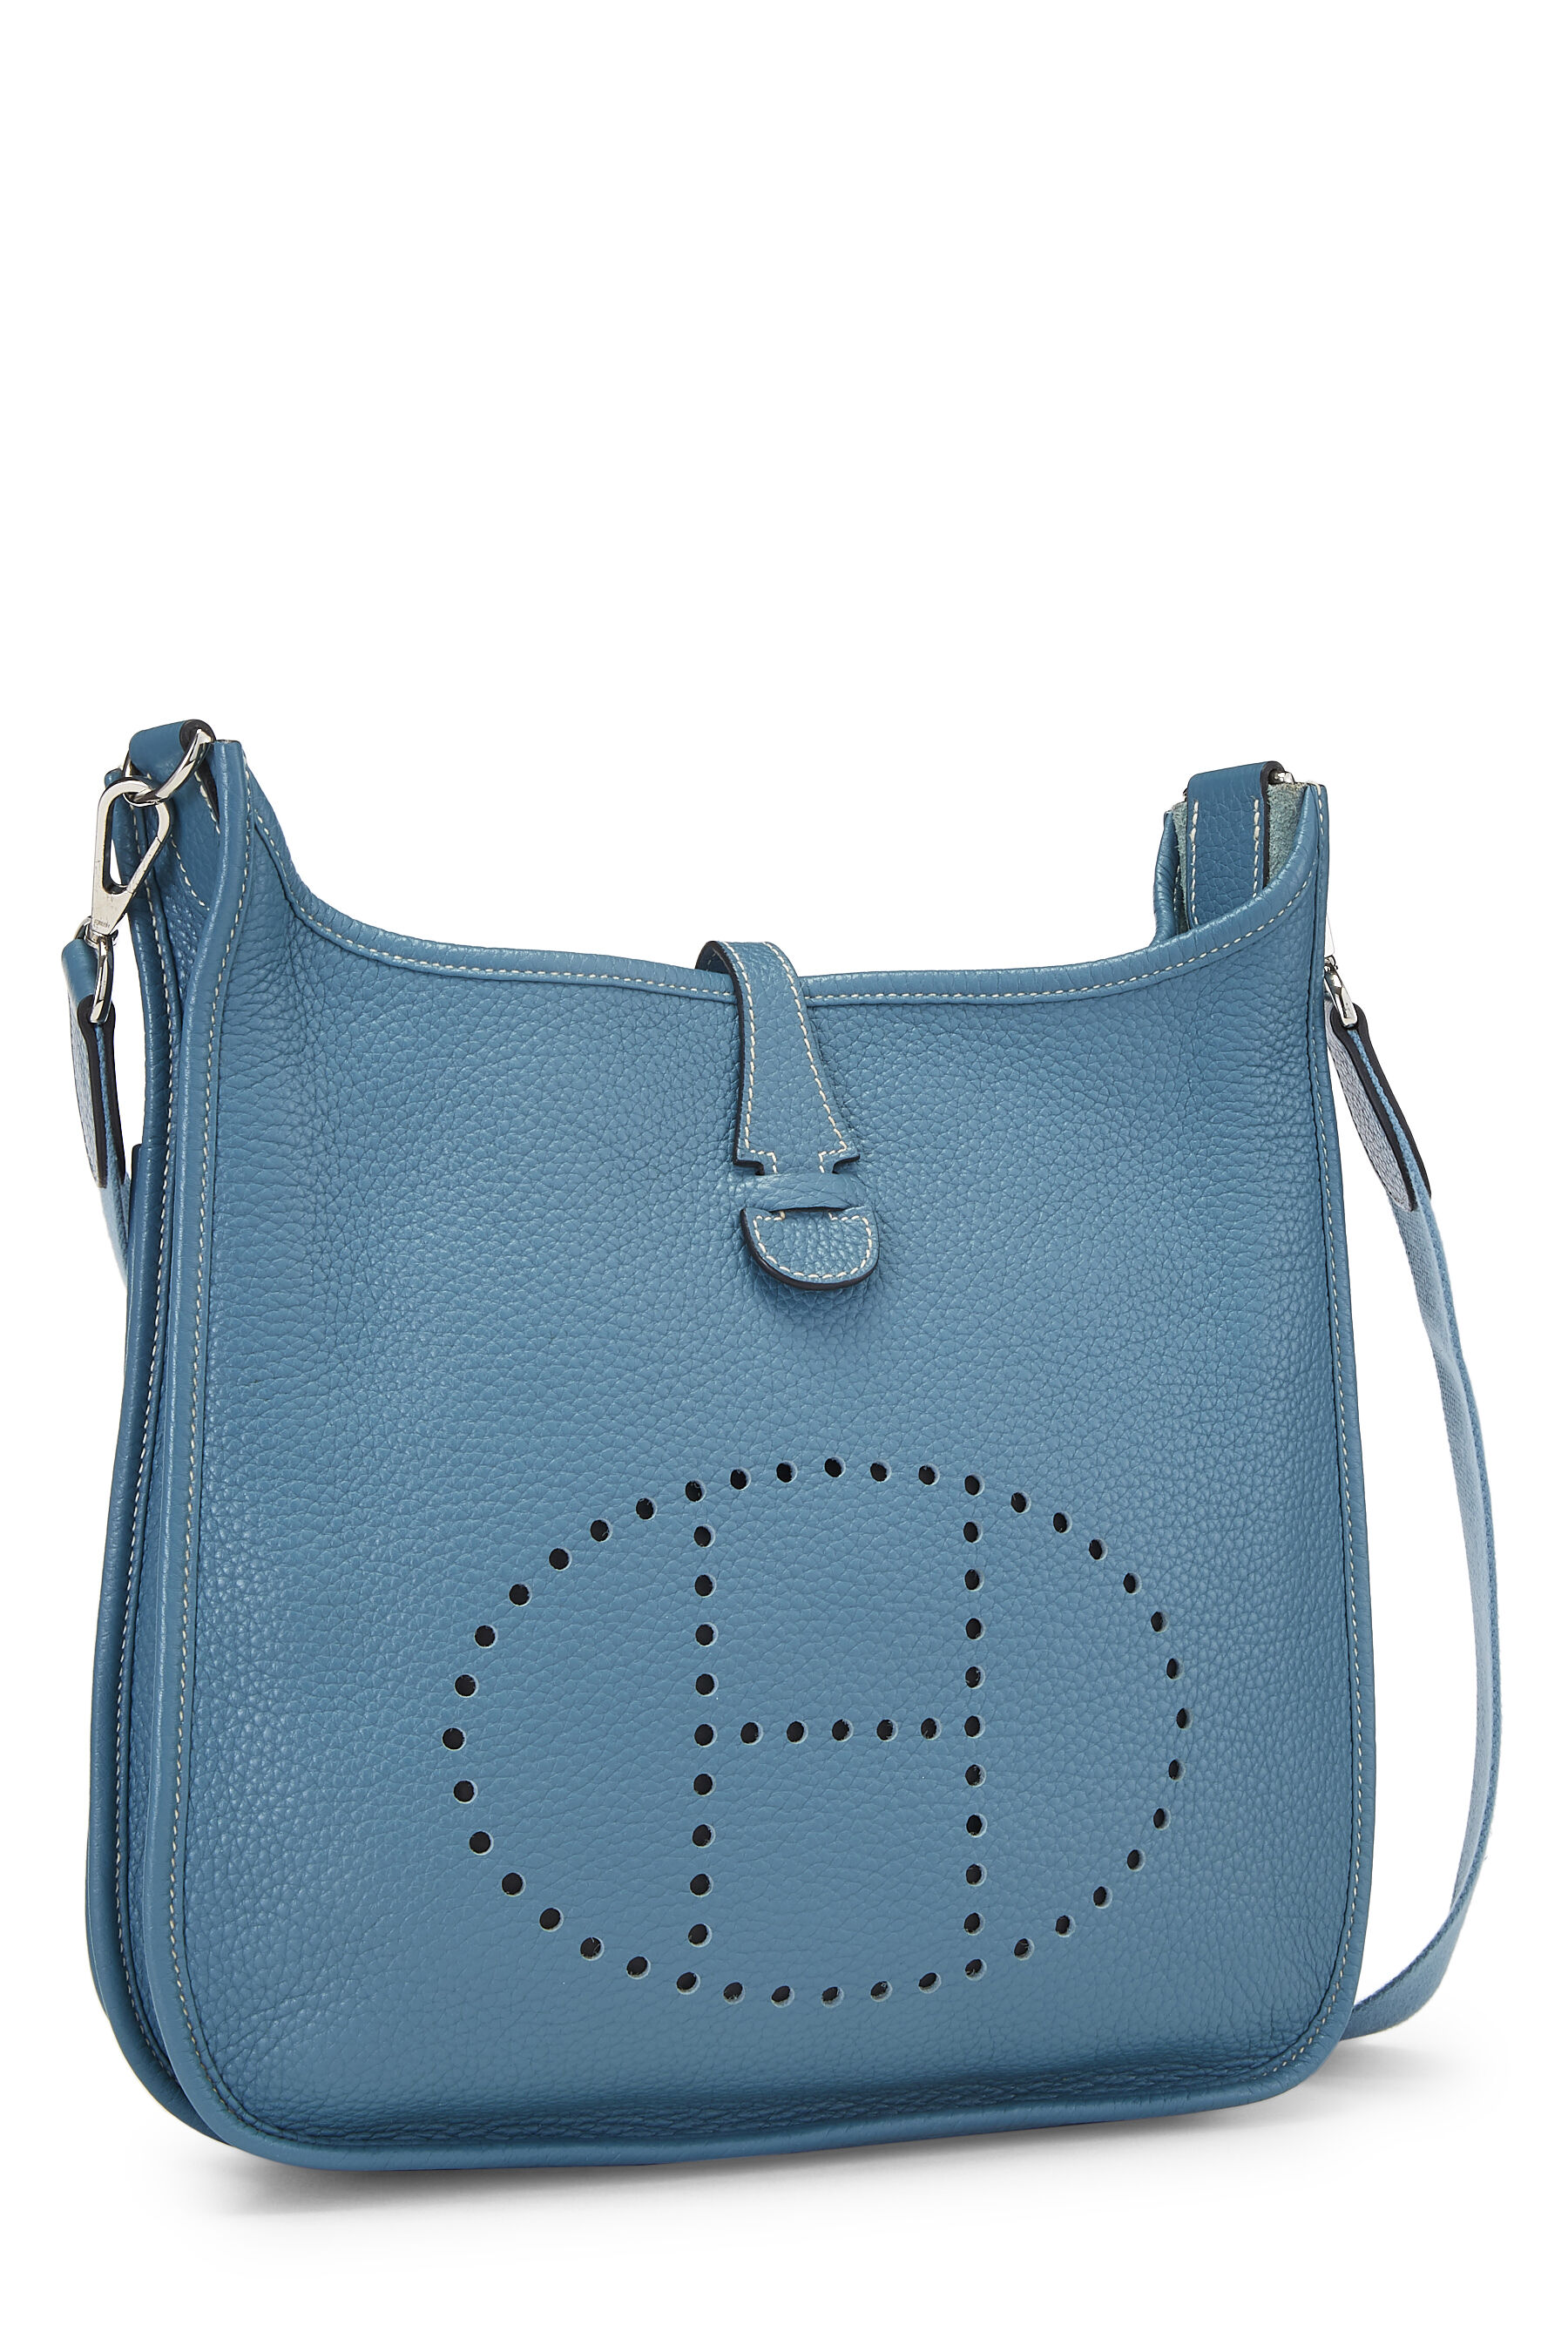 Hermes Blue Sapphire Clemence Leather Evelyne III PM Bag Hermes